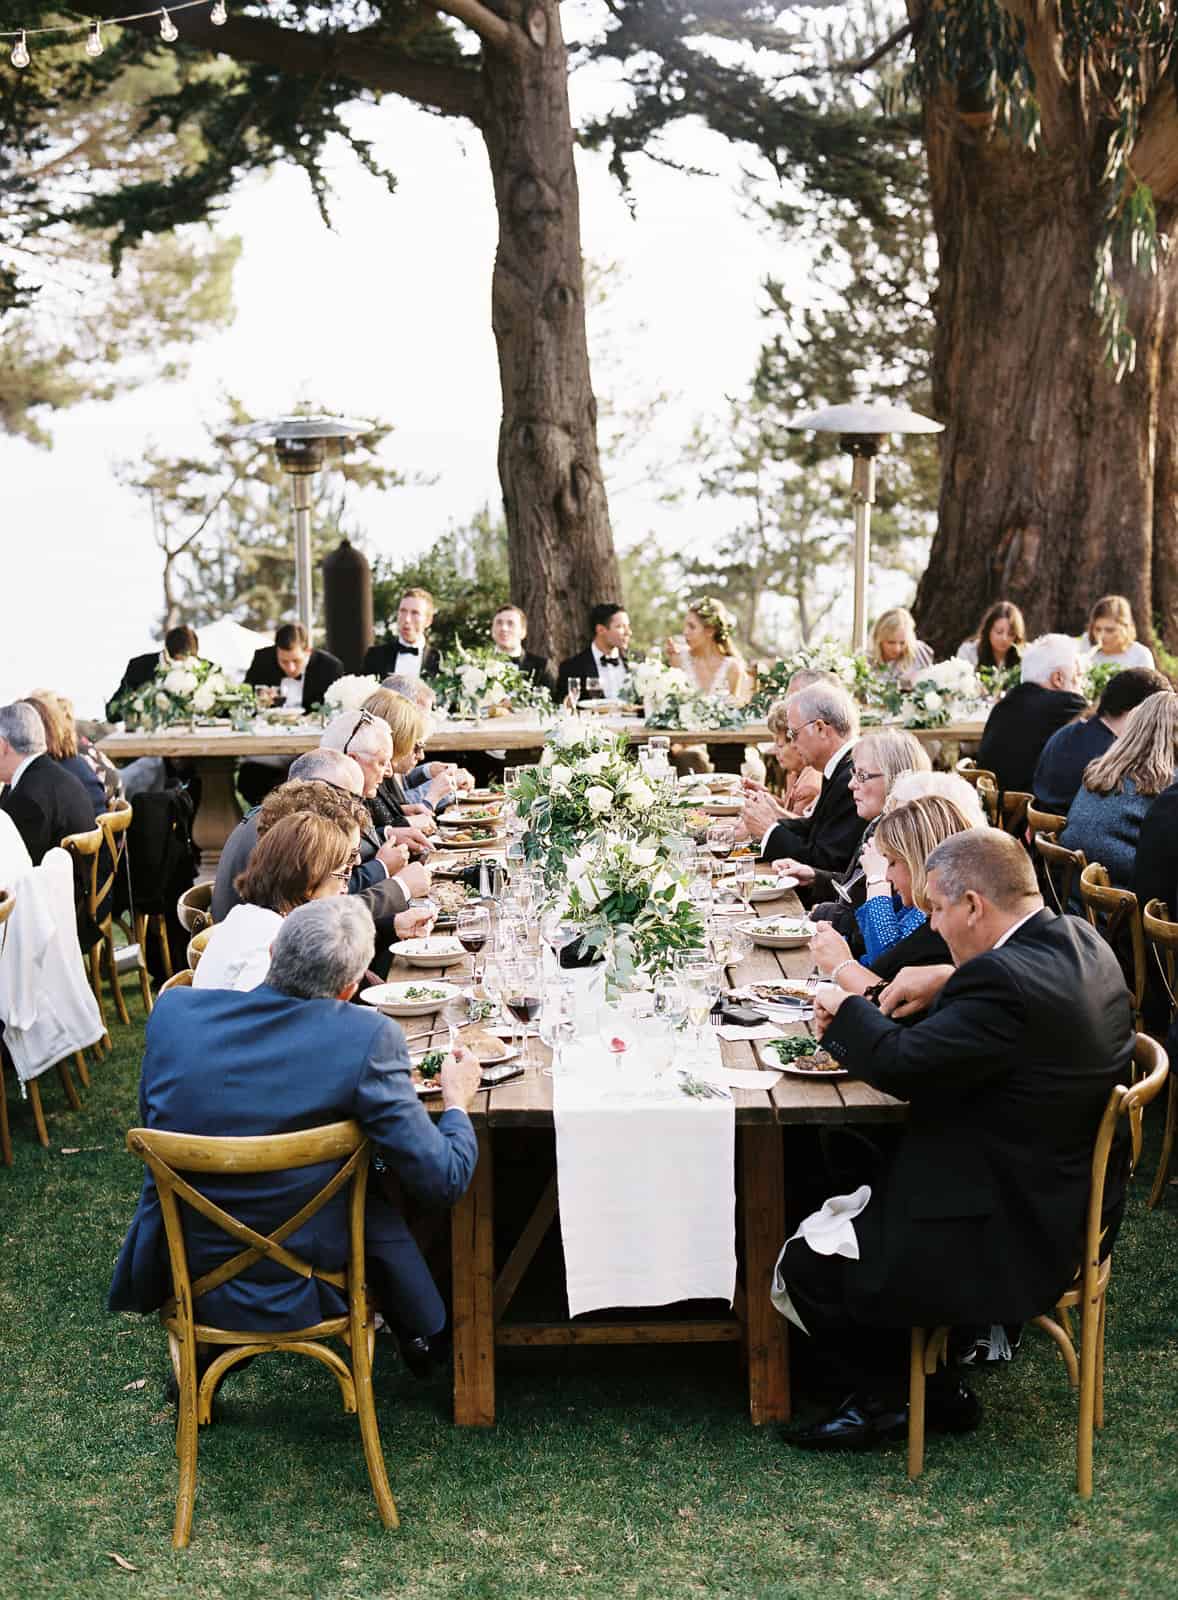 guests enjoying their dinner